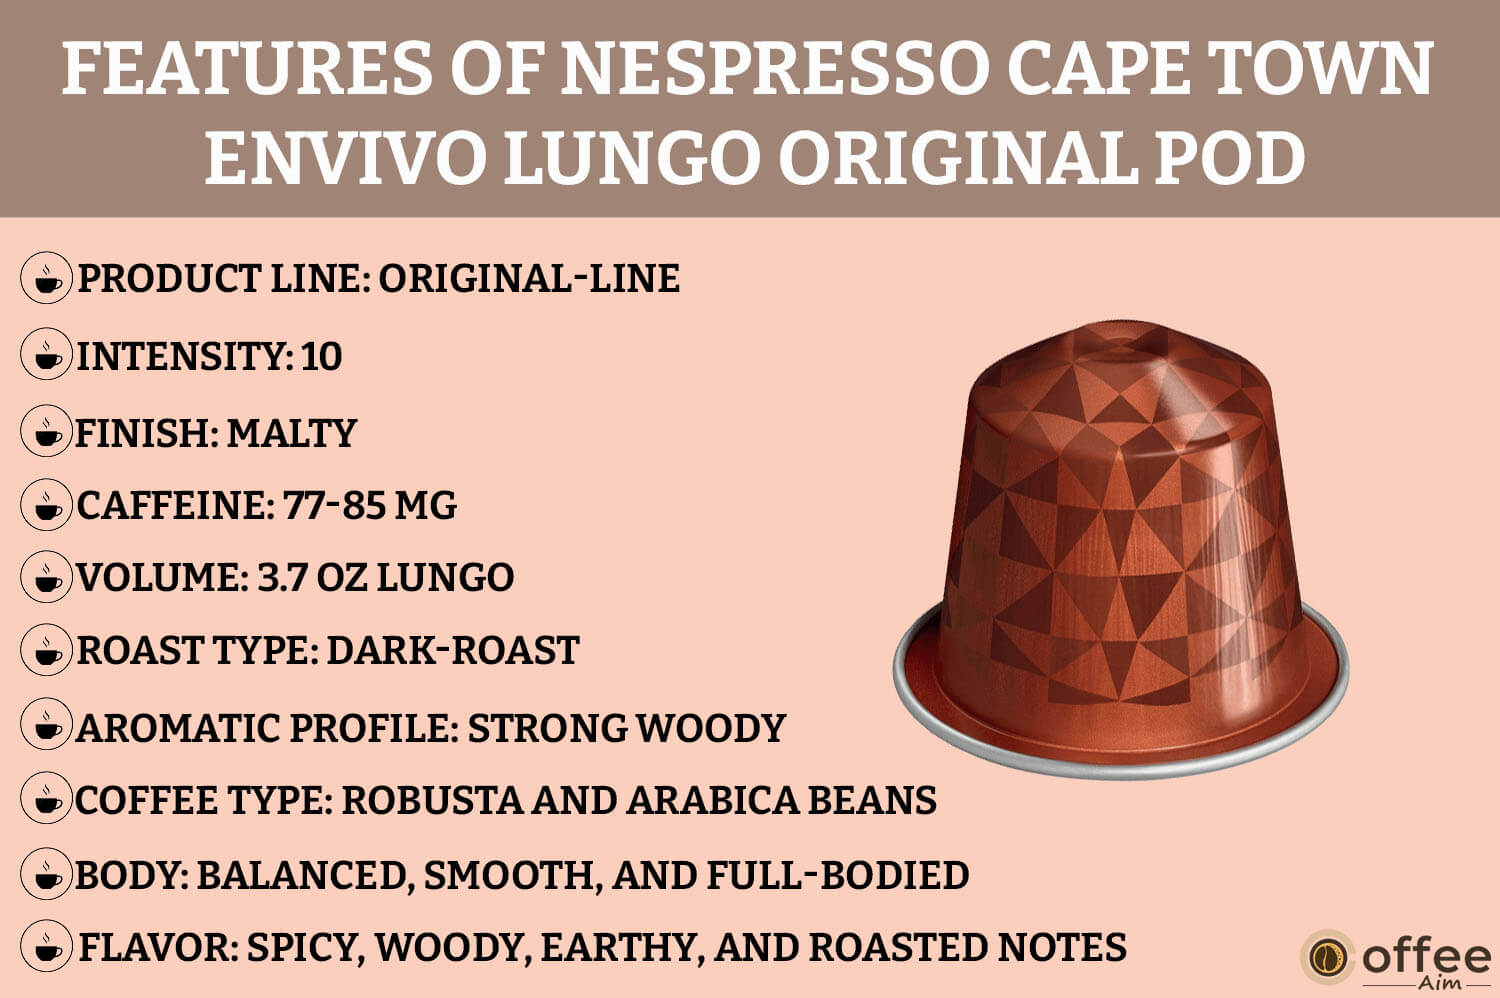 This image showcases Nespresso Cape Town Envivo Lungo features.